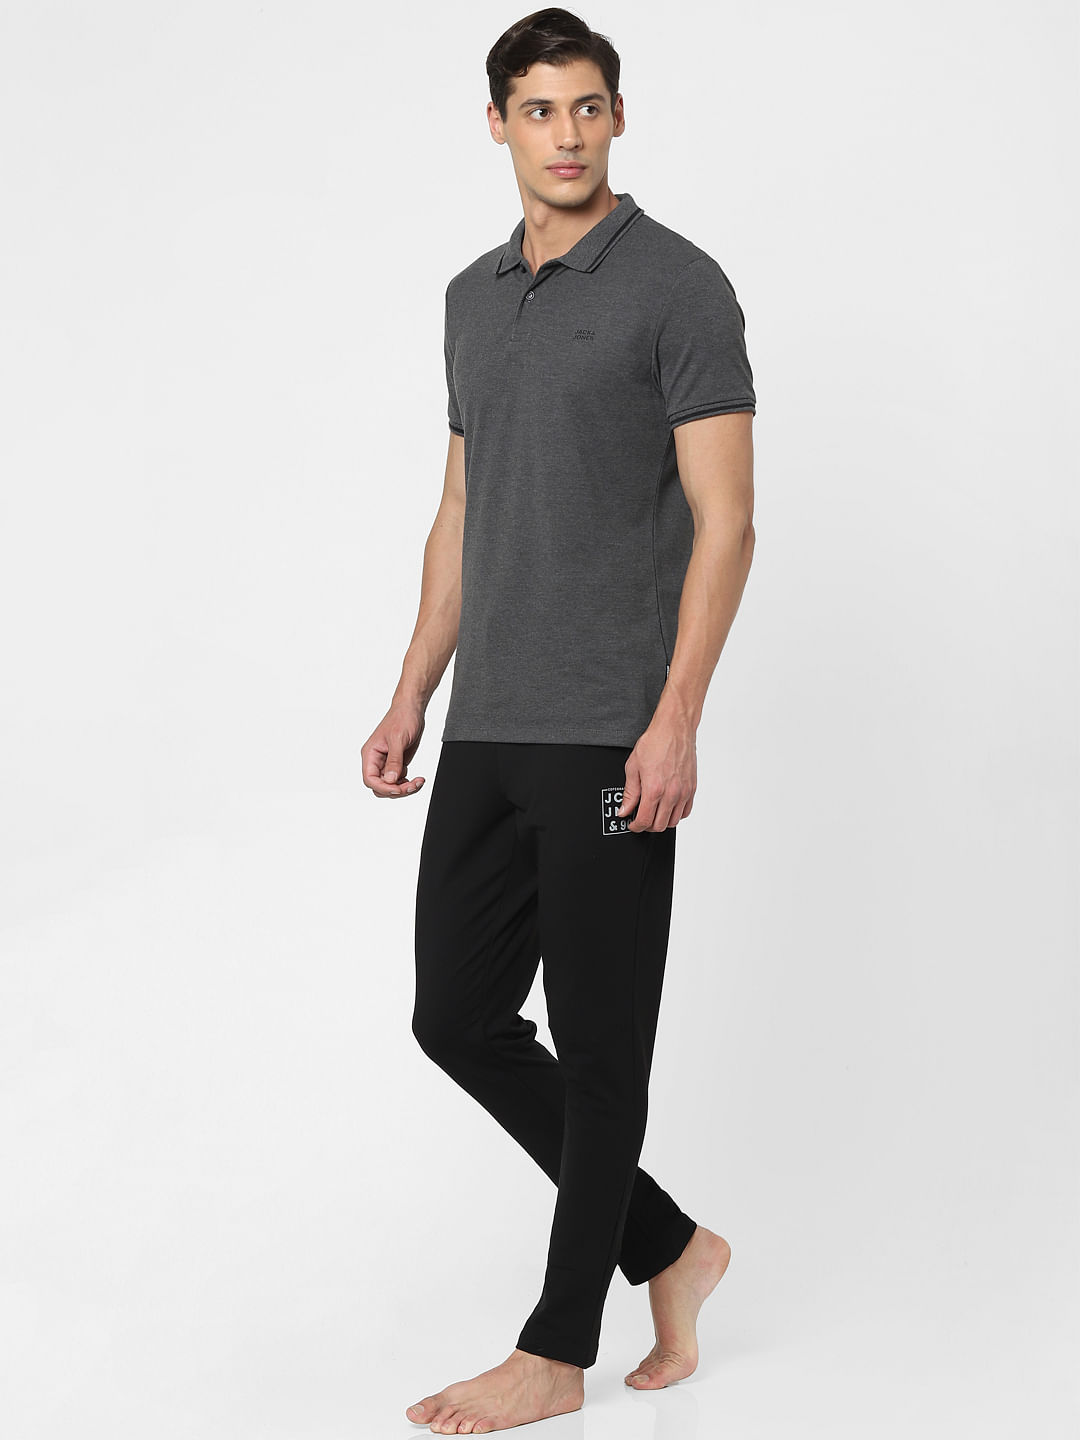 Men's Long Sleeve Cotton Pique Polo Shirt in Black | Superdry US